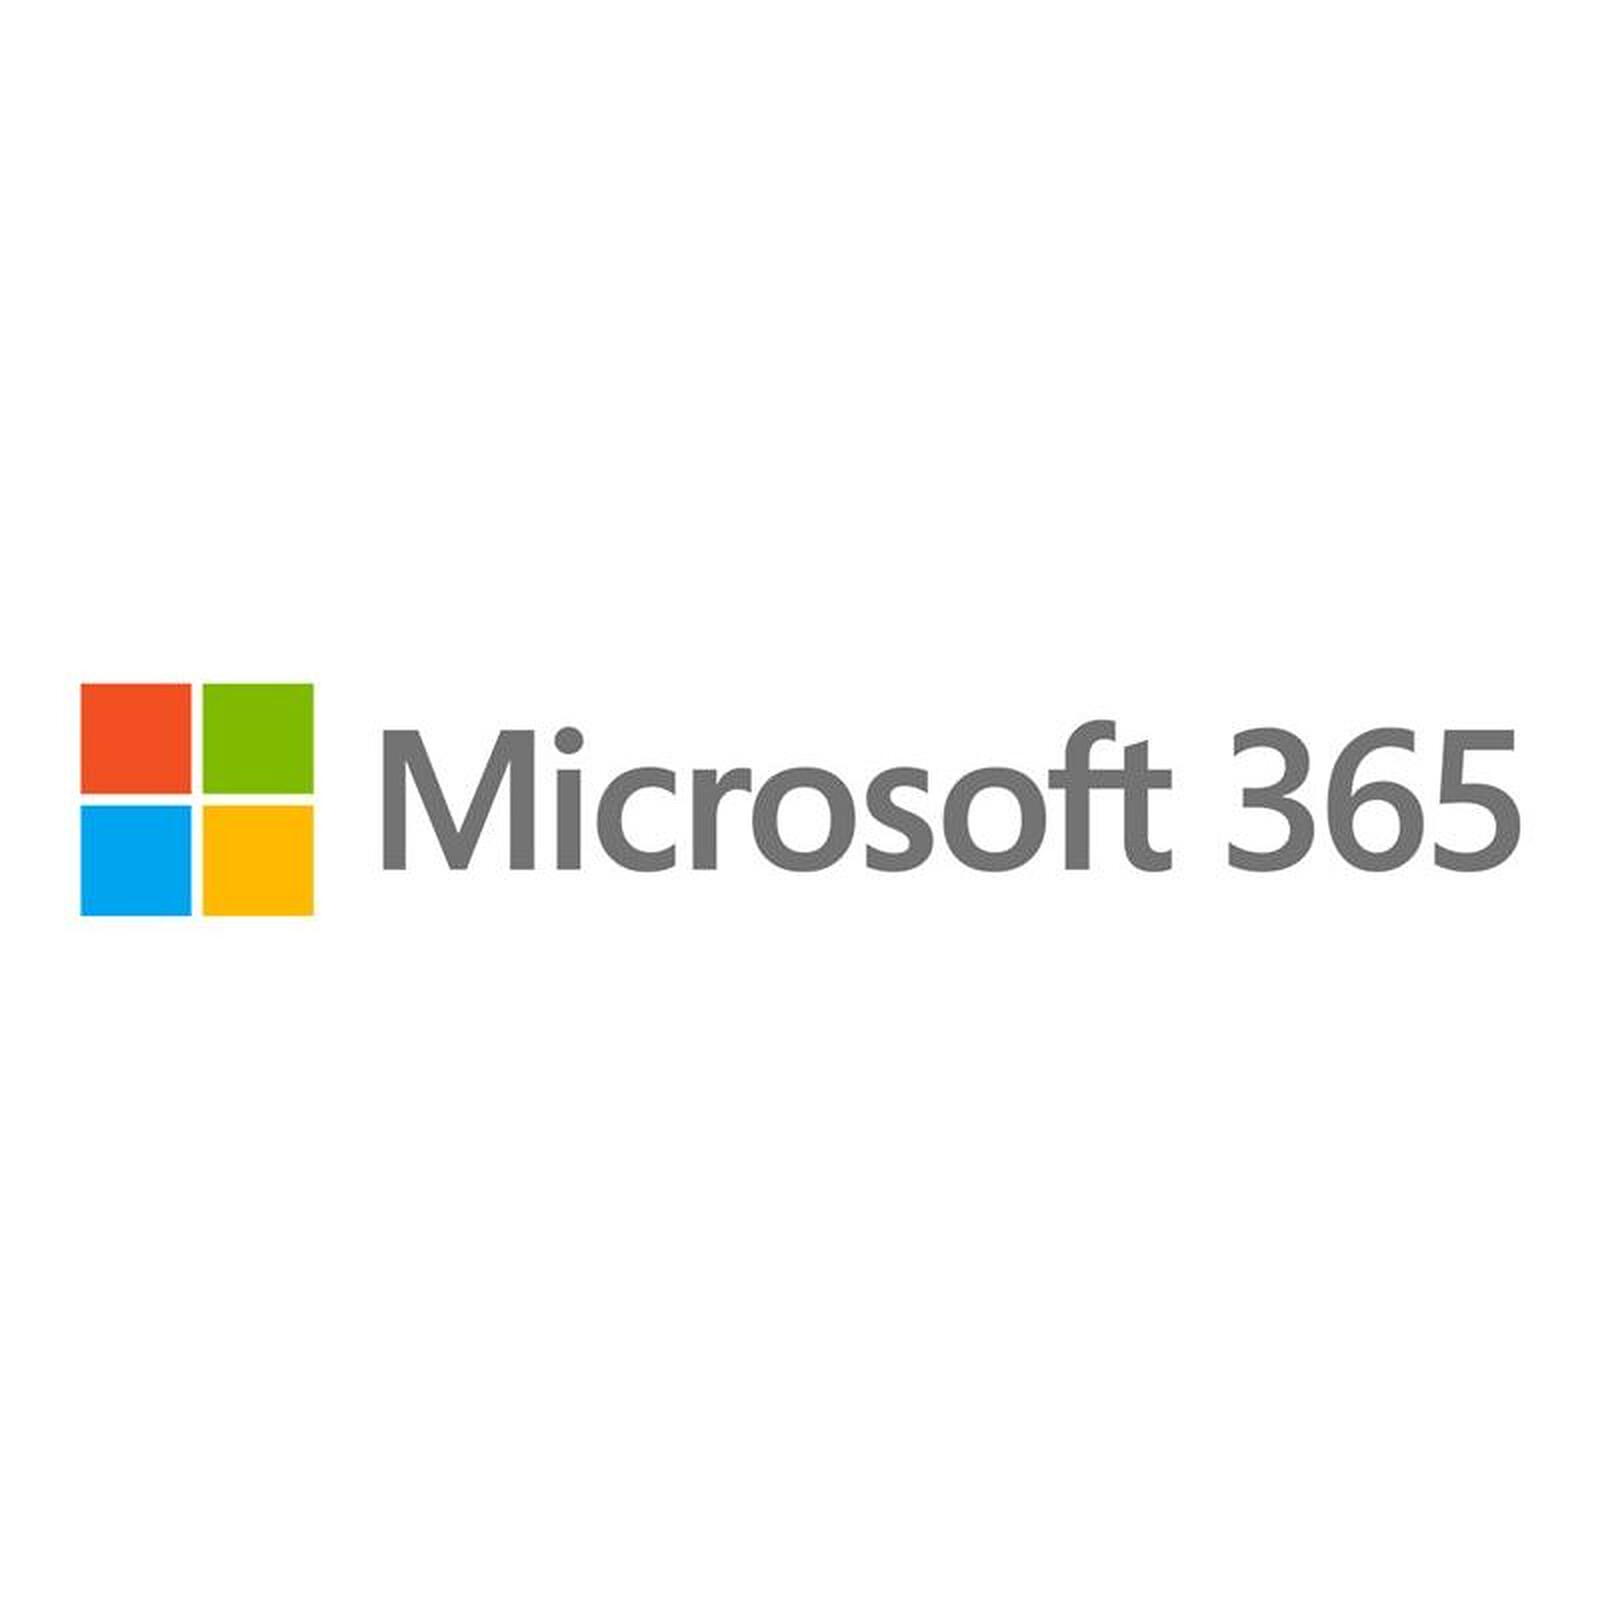 Fanático lino Extremo Microsoft 365 Personal - Programa de oficina Microsoft en LDLC |  ¡Musericordia!